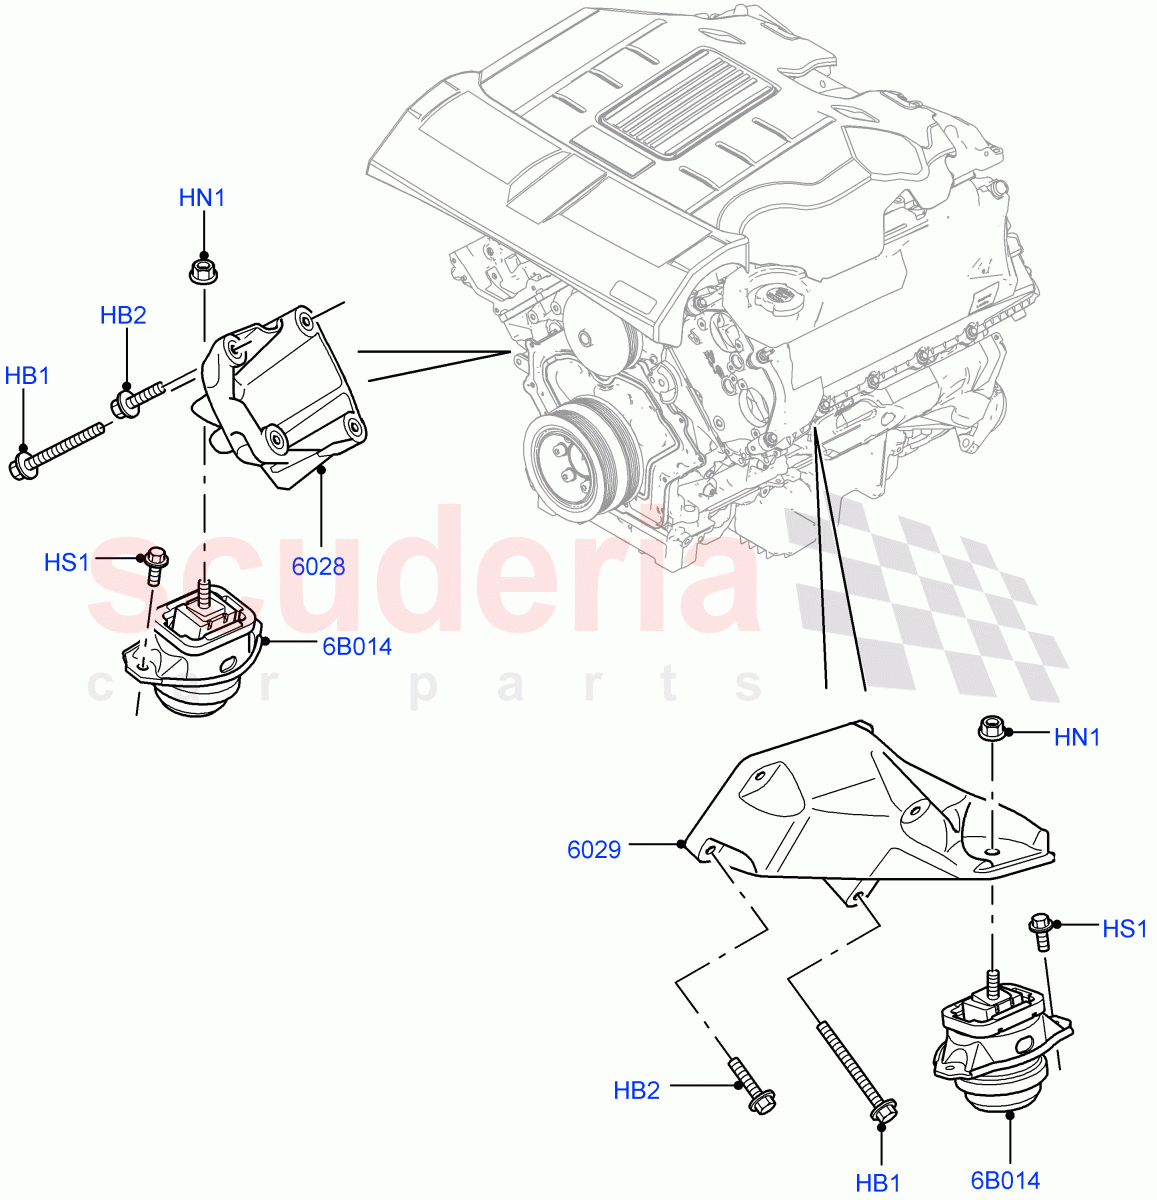 Engine Mounting(3.0L DOHC GDI SC V6 PETROL)((V)FROMEA000001) of Land Rover Land Rover Discovery 4 (2010-2016) [3.0 DOHC GDI SC V6 Petrol]